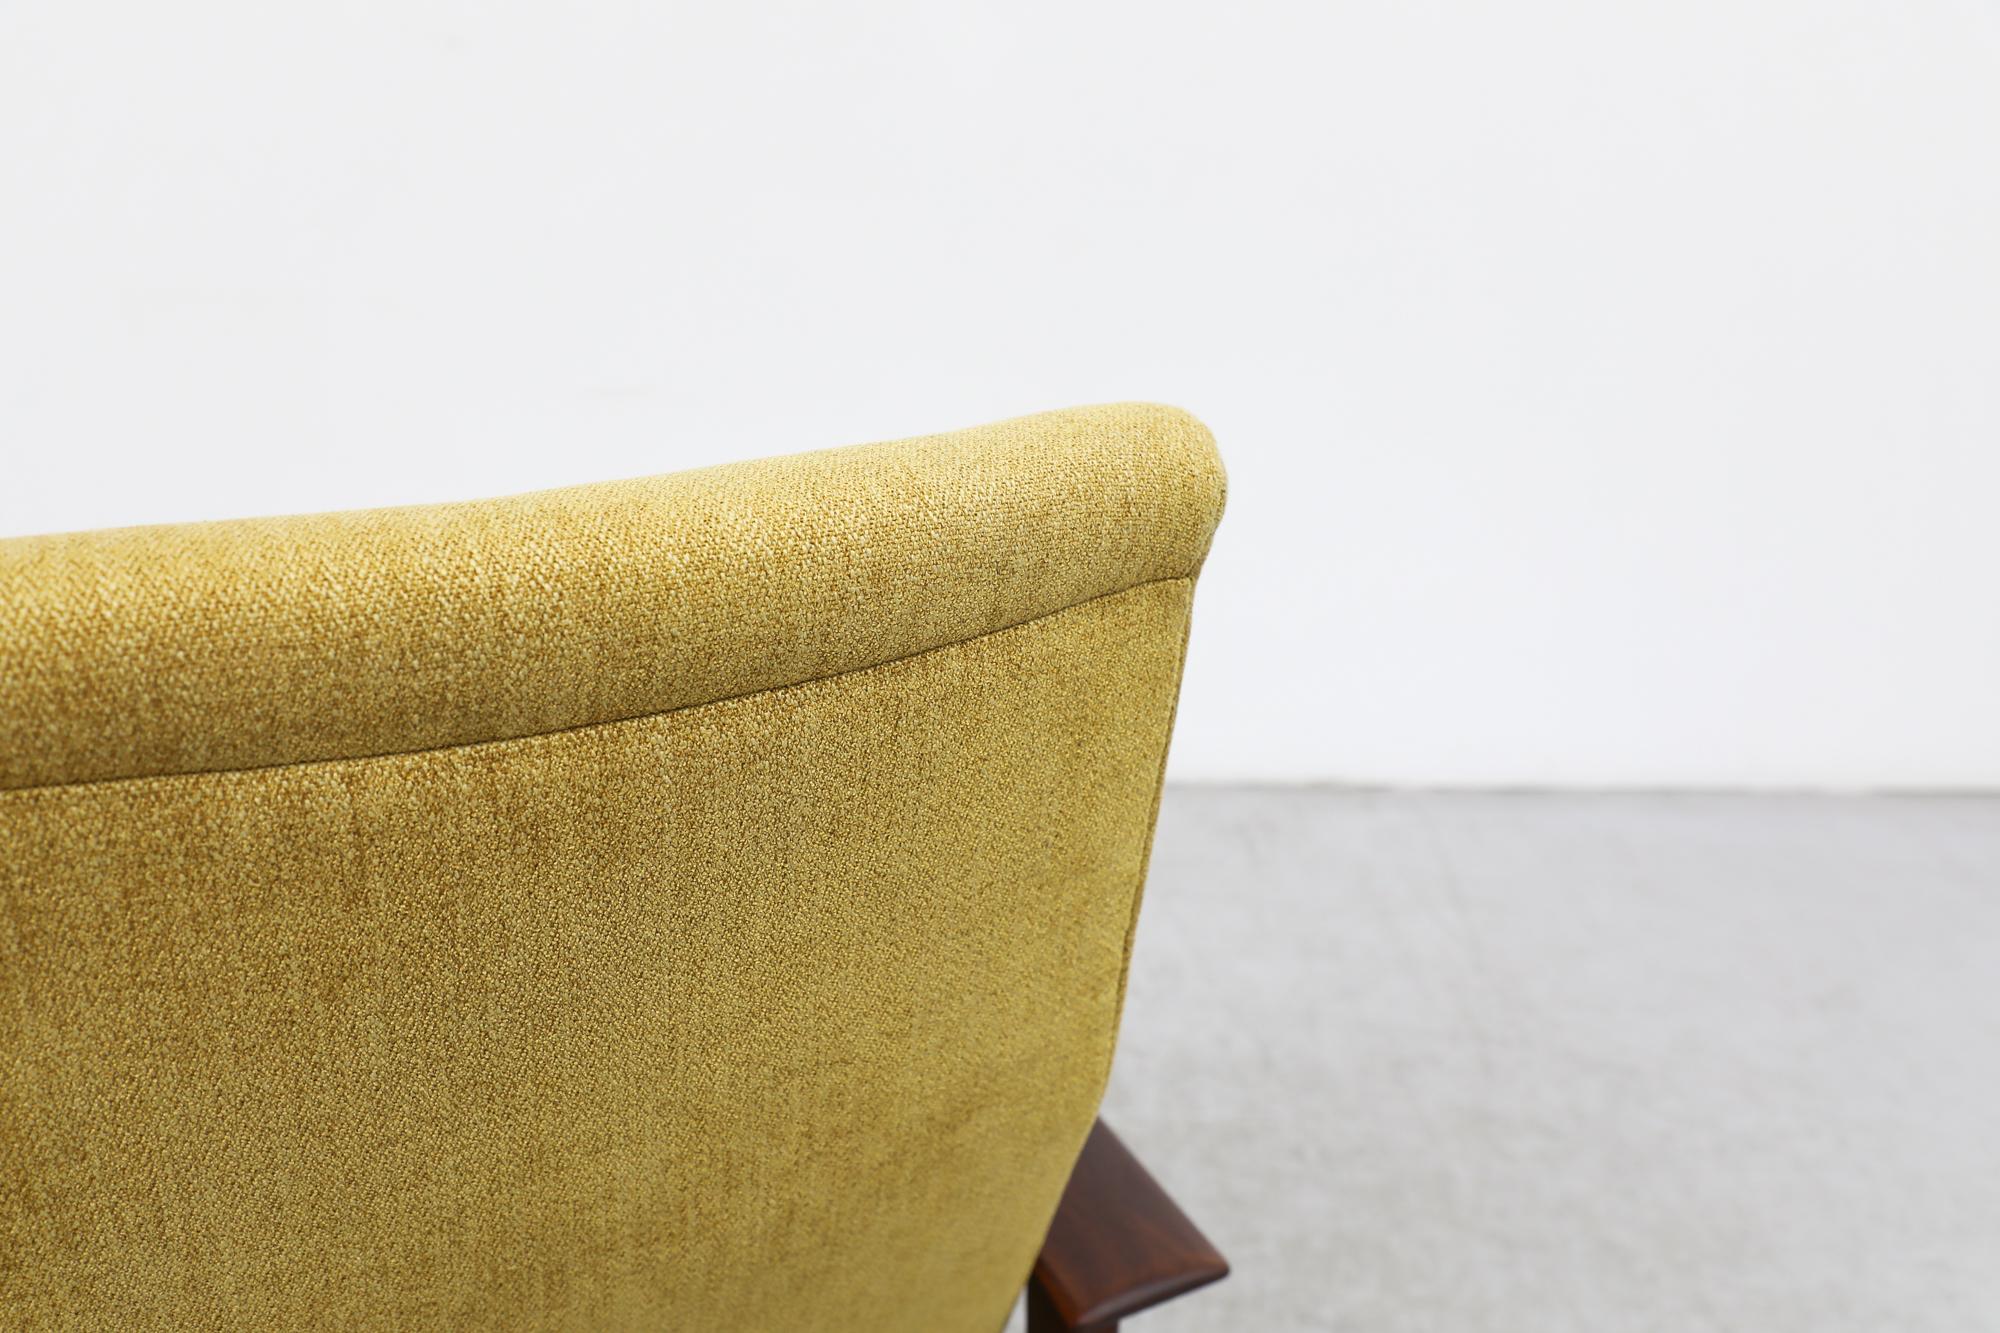 Handsome Hans Wegner Inspired Mid-Century Teak Lounge Chair in Saffron Fabric For Sale 2